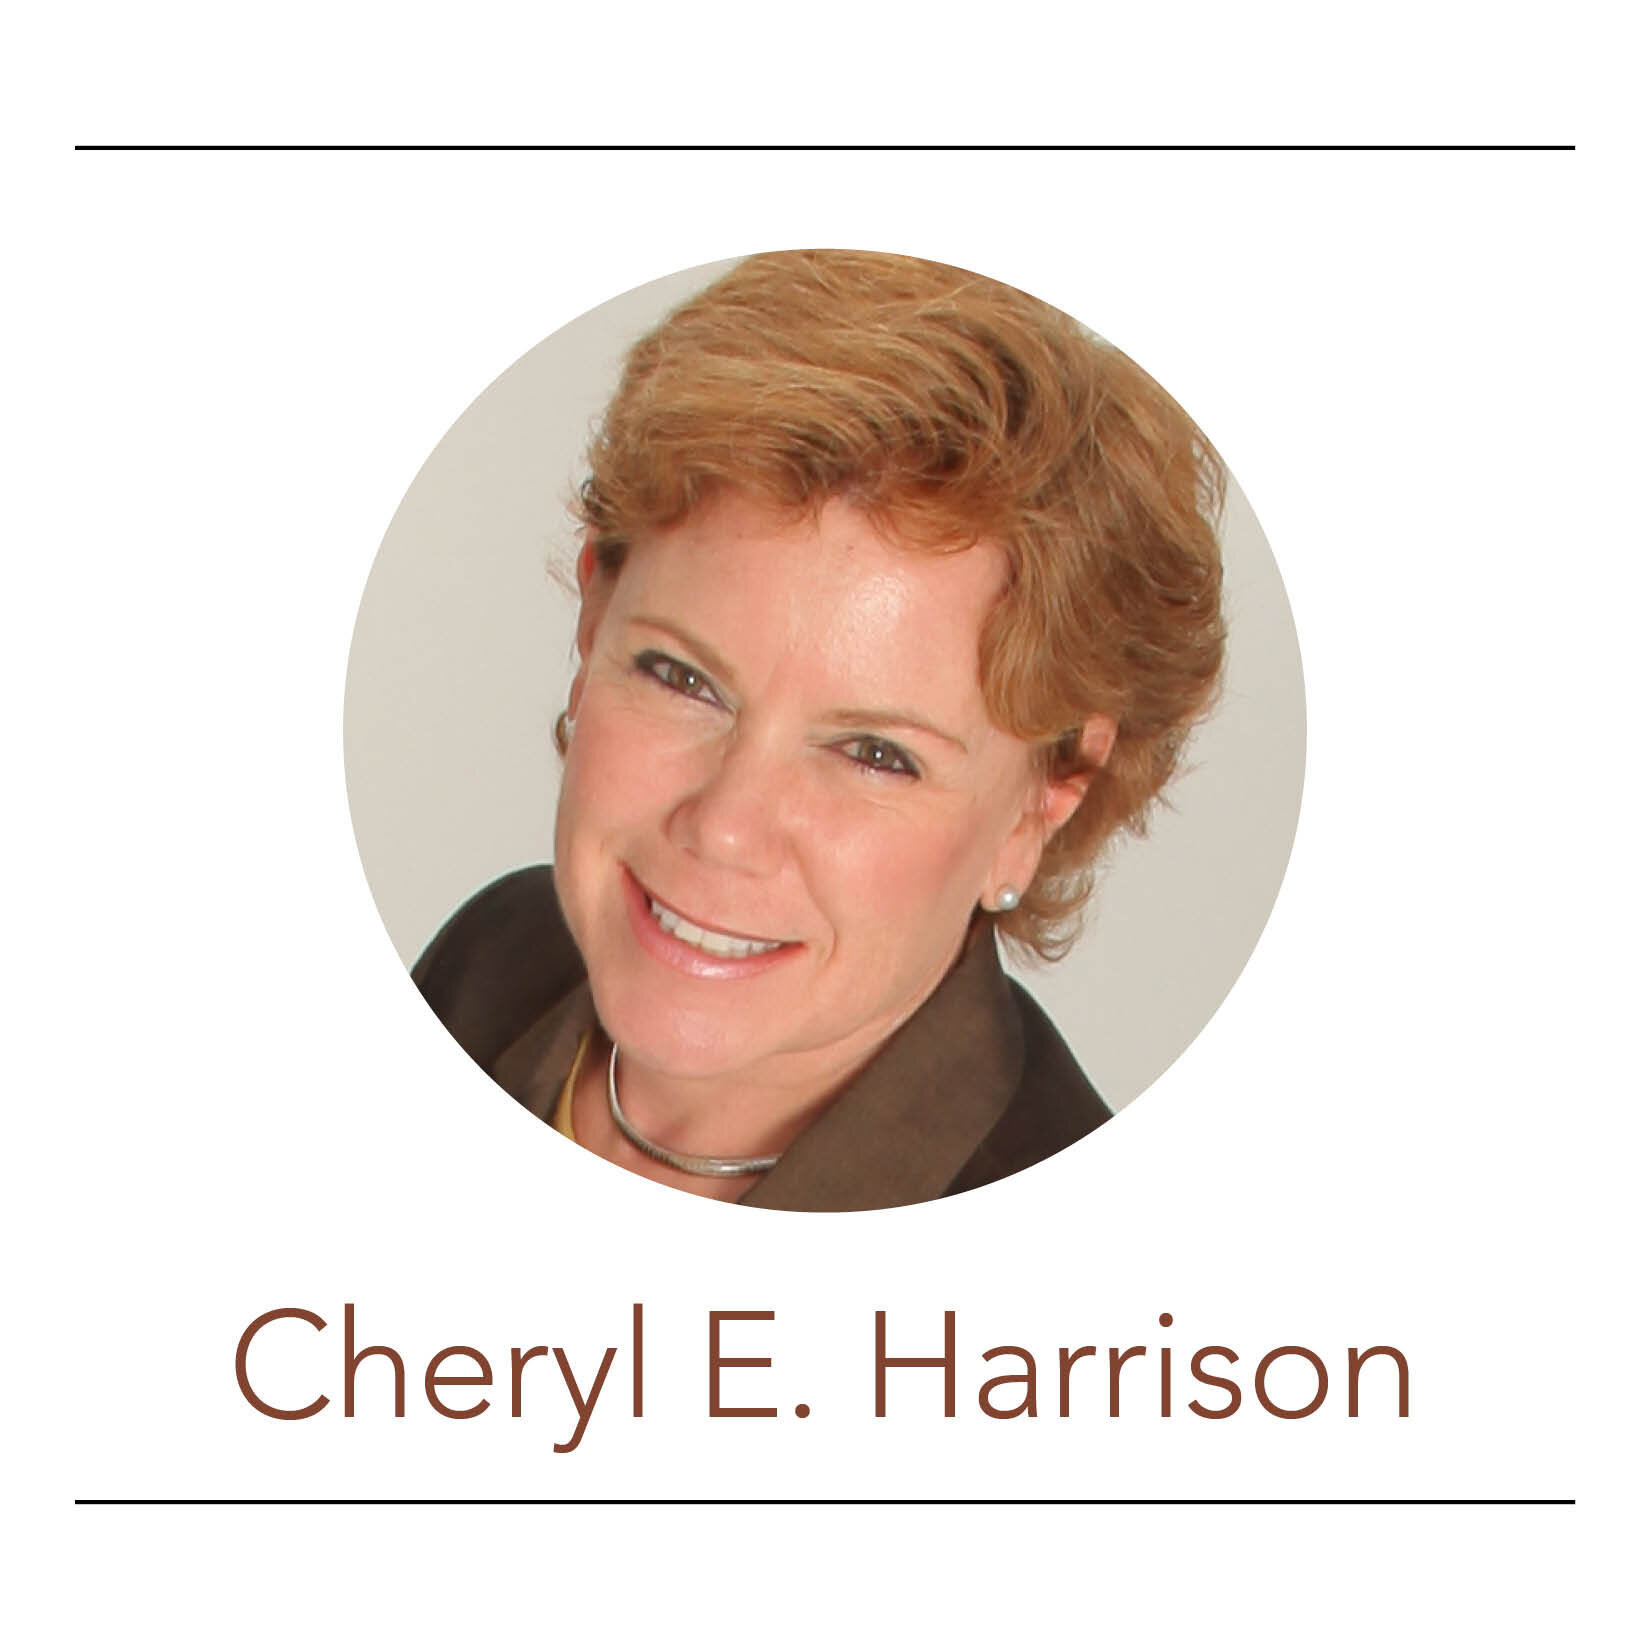 Cheryl E. Harrison